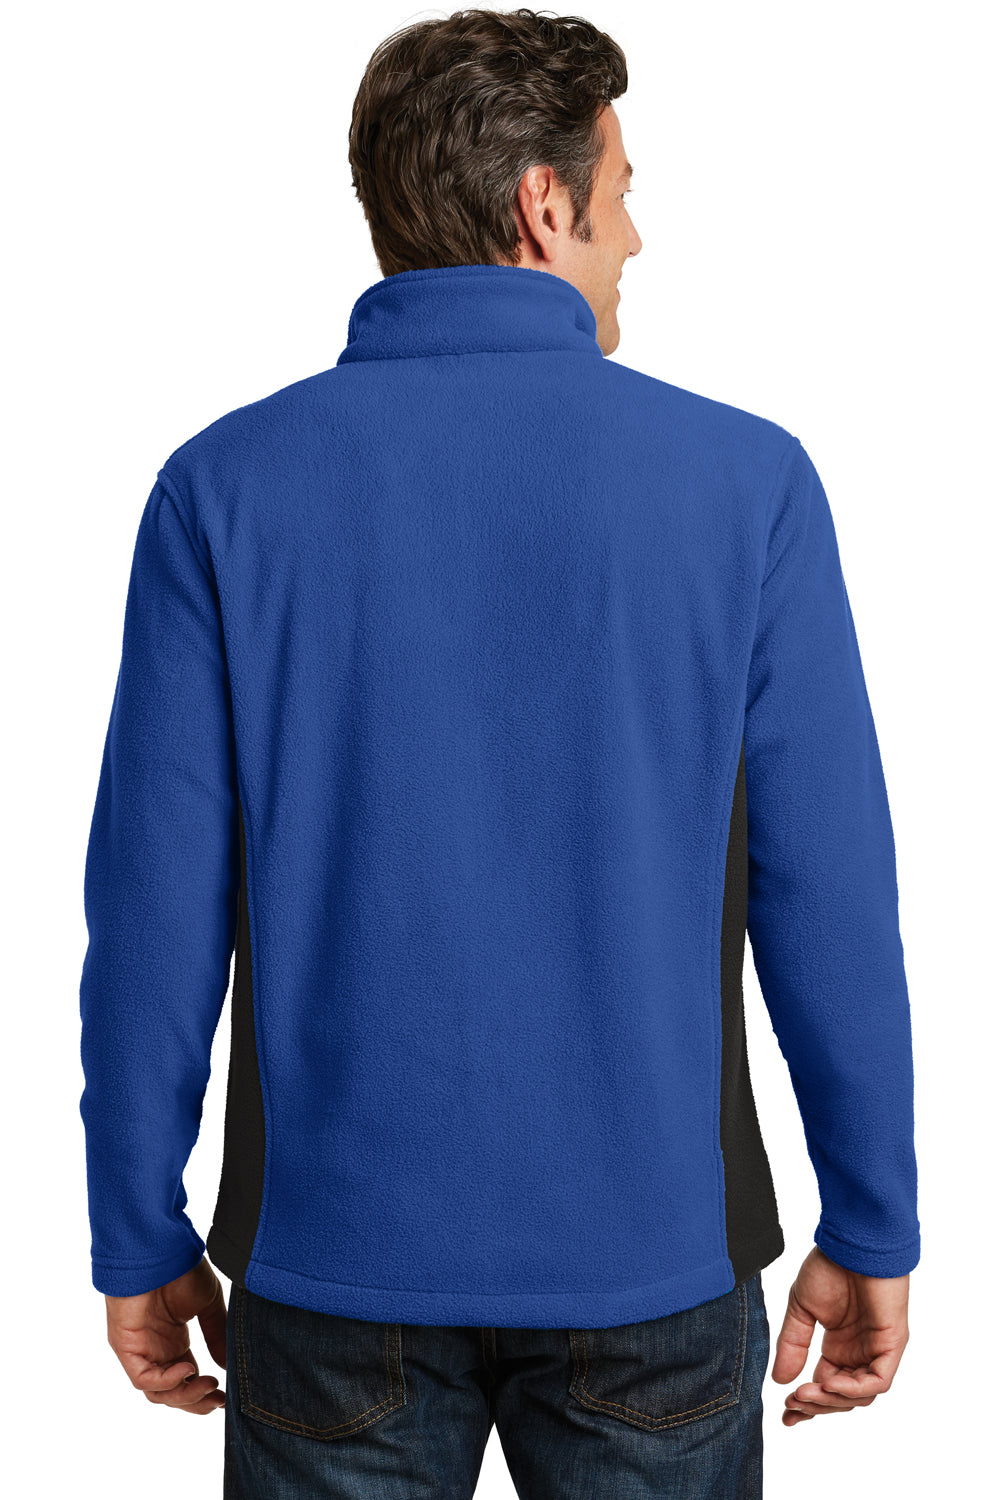 Port Authority F216 Mens Full Zip Fleece Jacket Royal Blue/Black Back